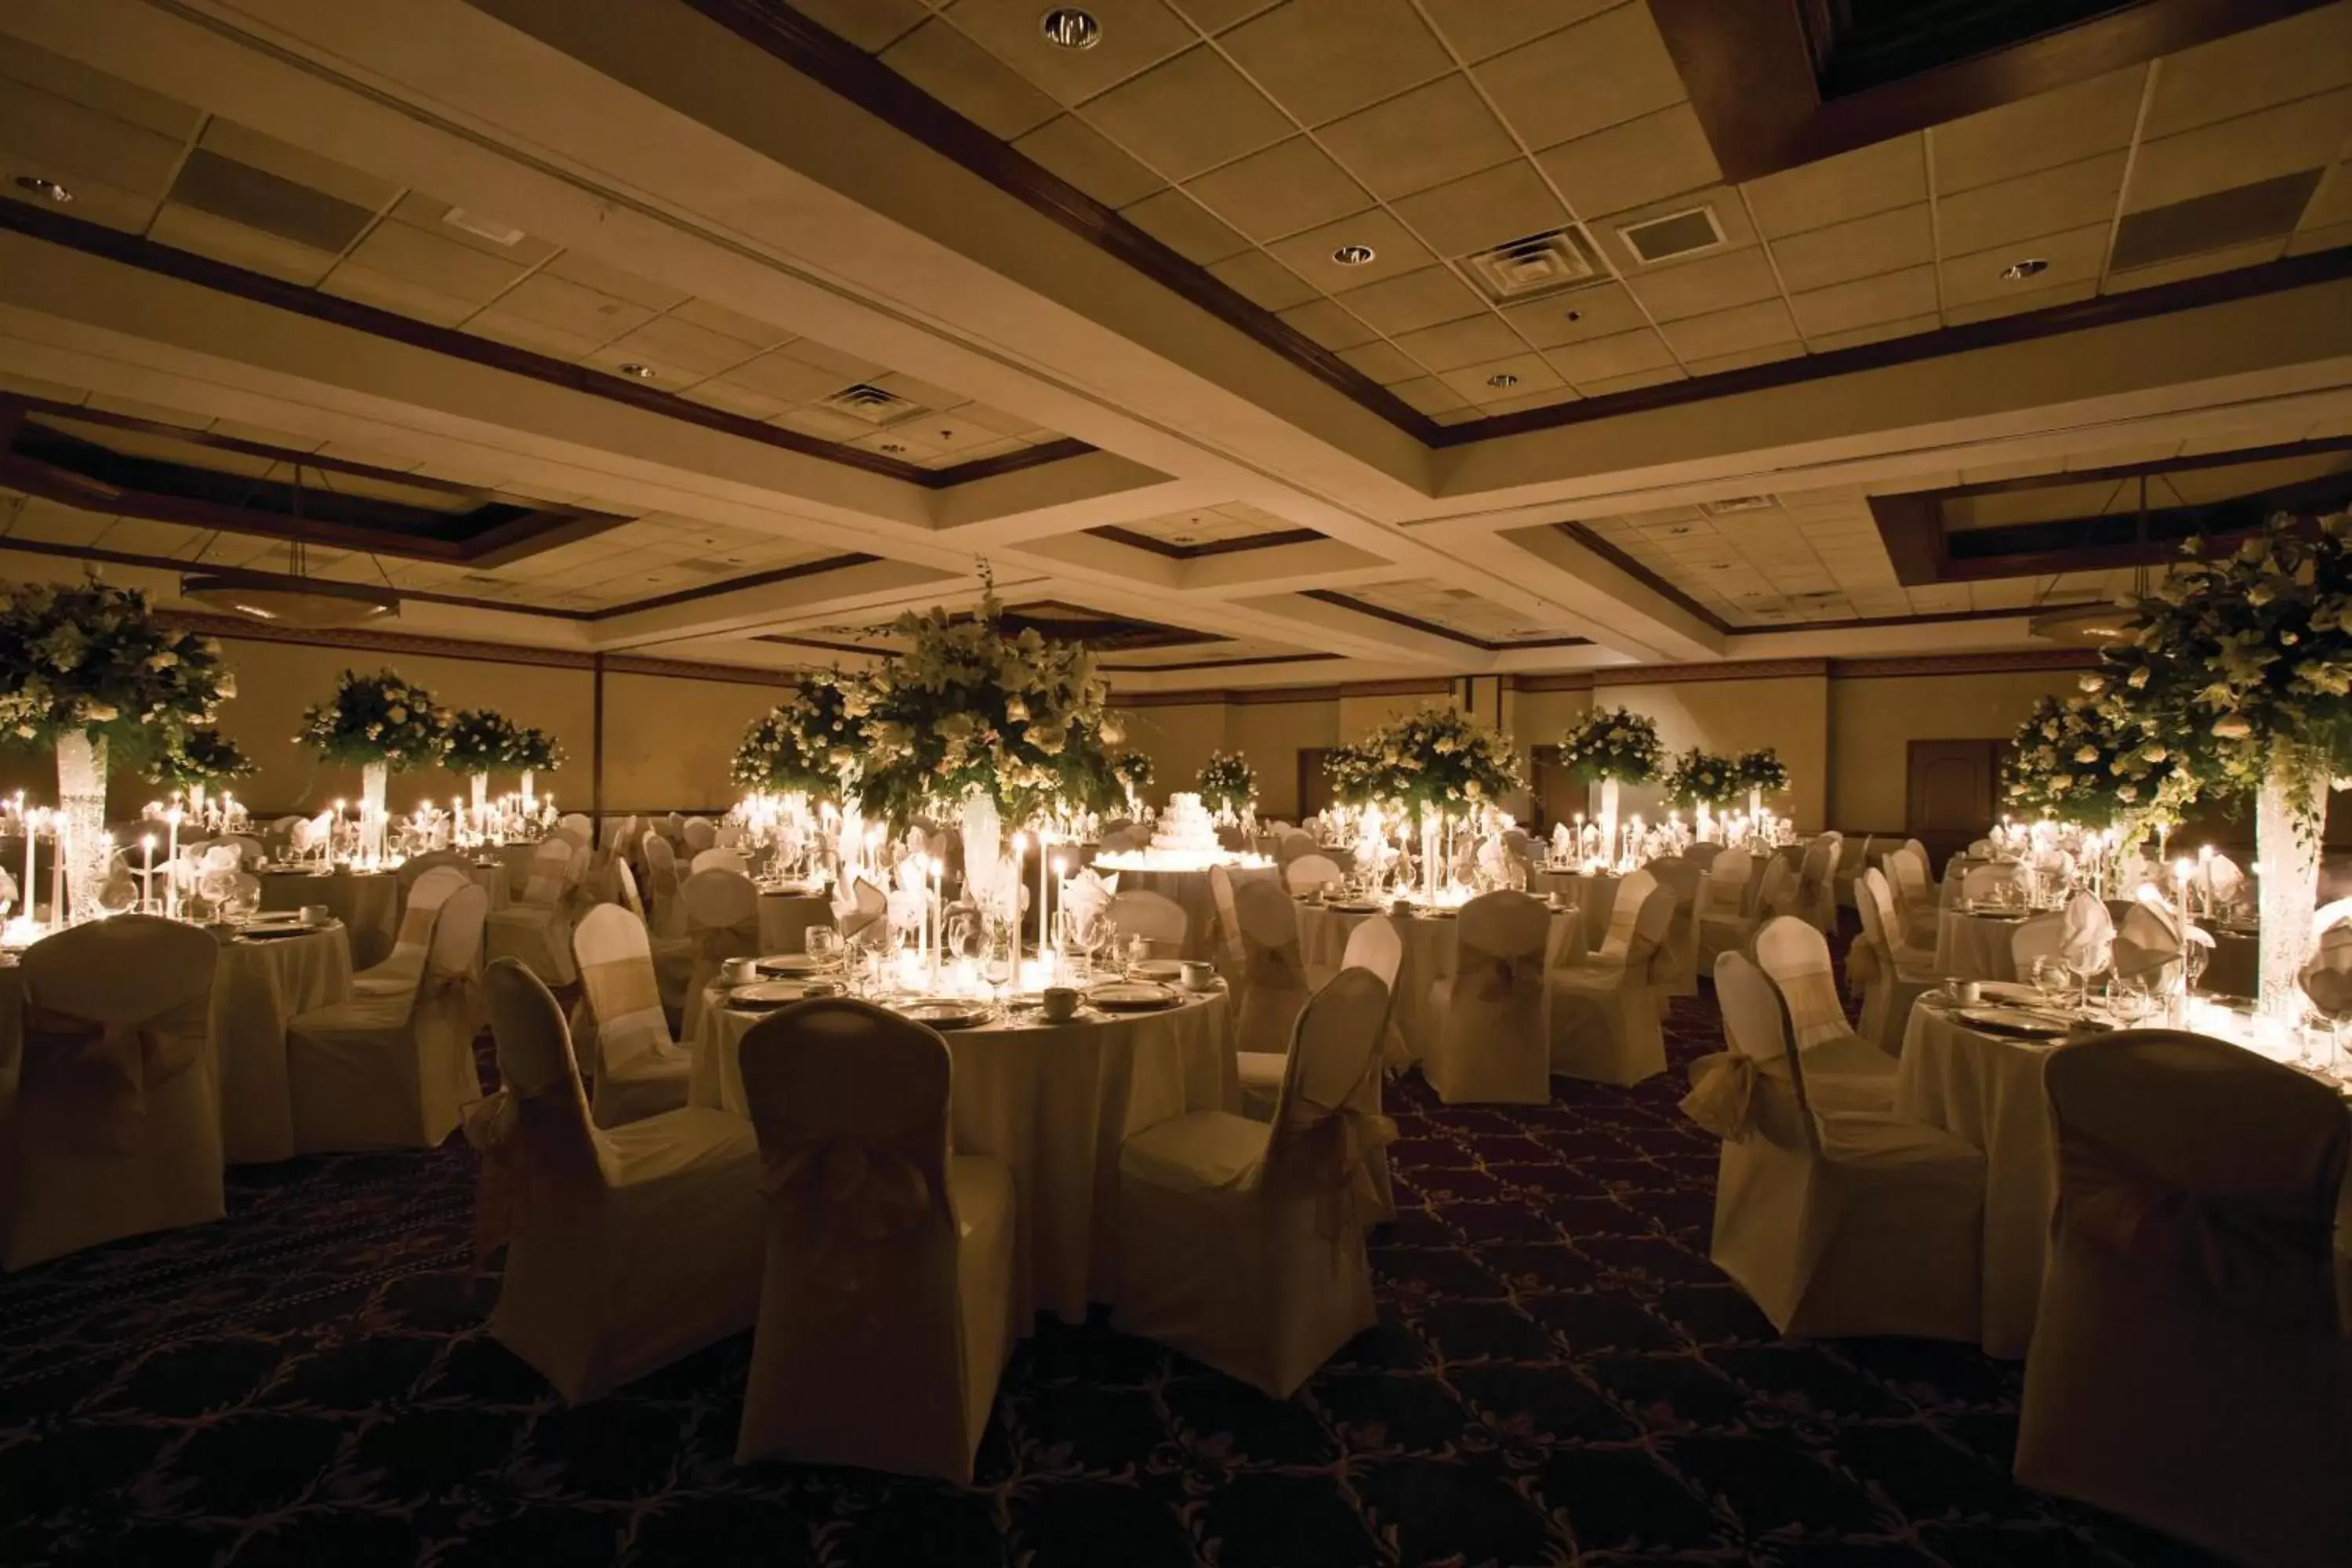 Banquet/Function facilities, Banquet Facilities in Ameristar Casino Hotel Council Bluffs